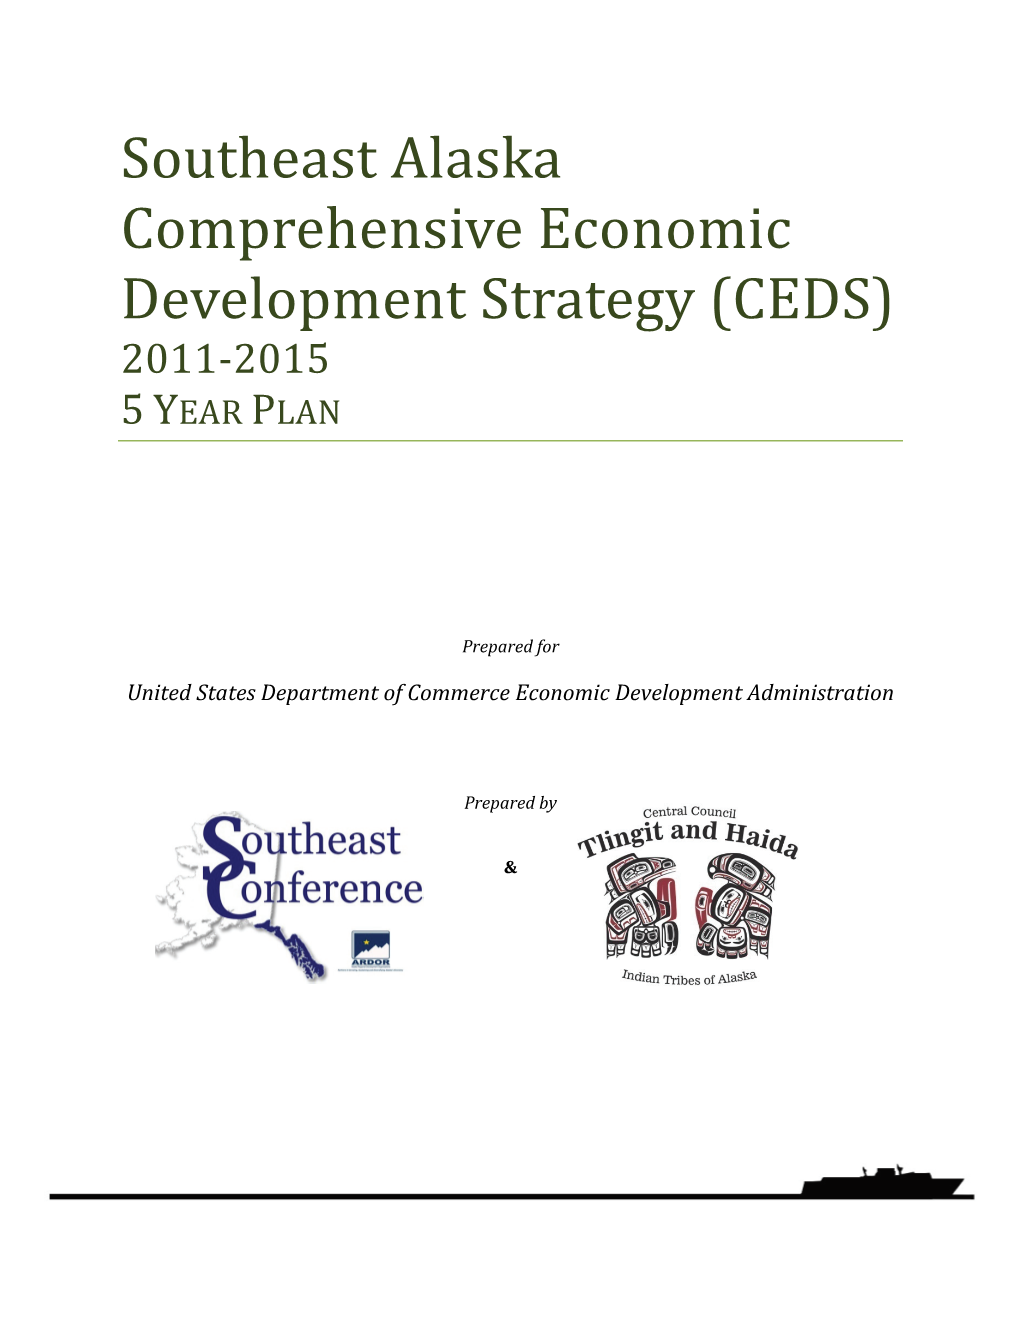 Southeast Alaska Comprehensive Economic Development Strategy (CEDS) 2011‐2015 5 YEAR PLAN